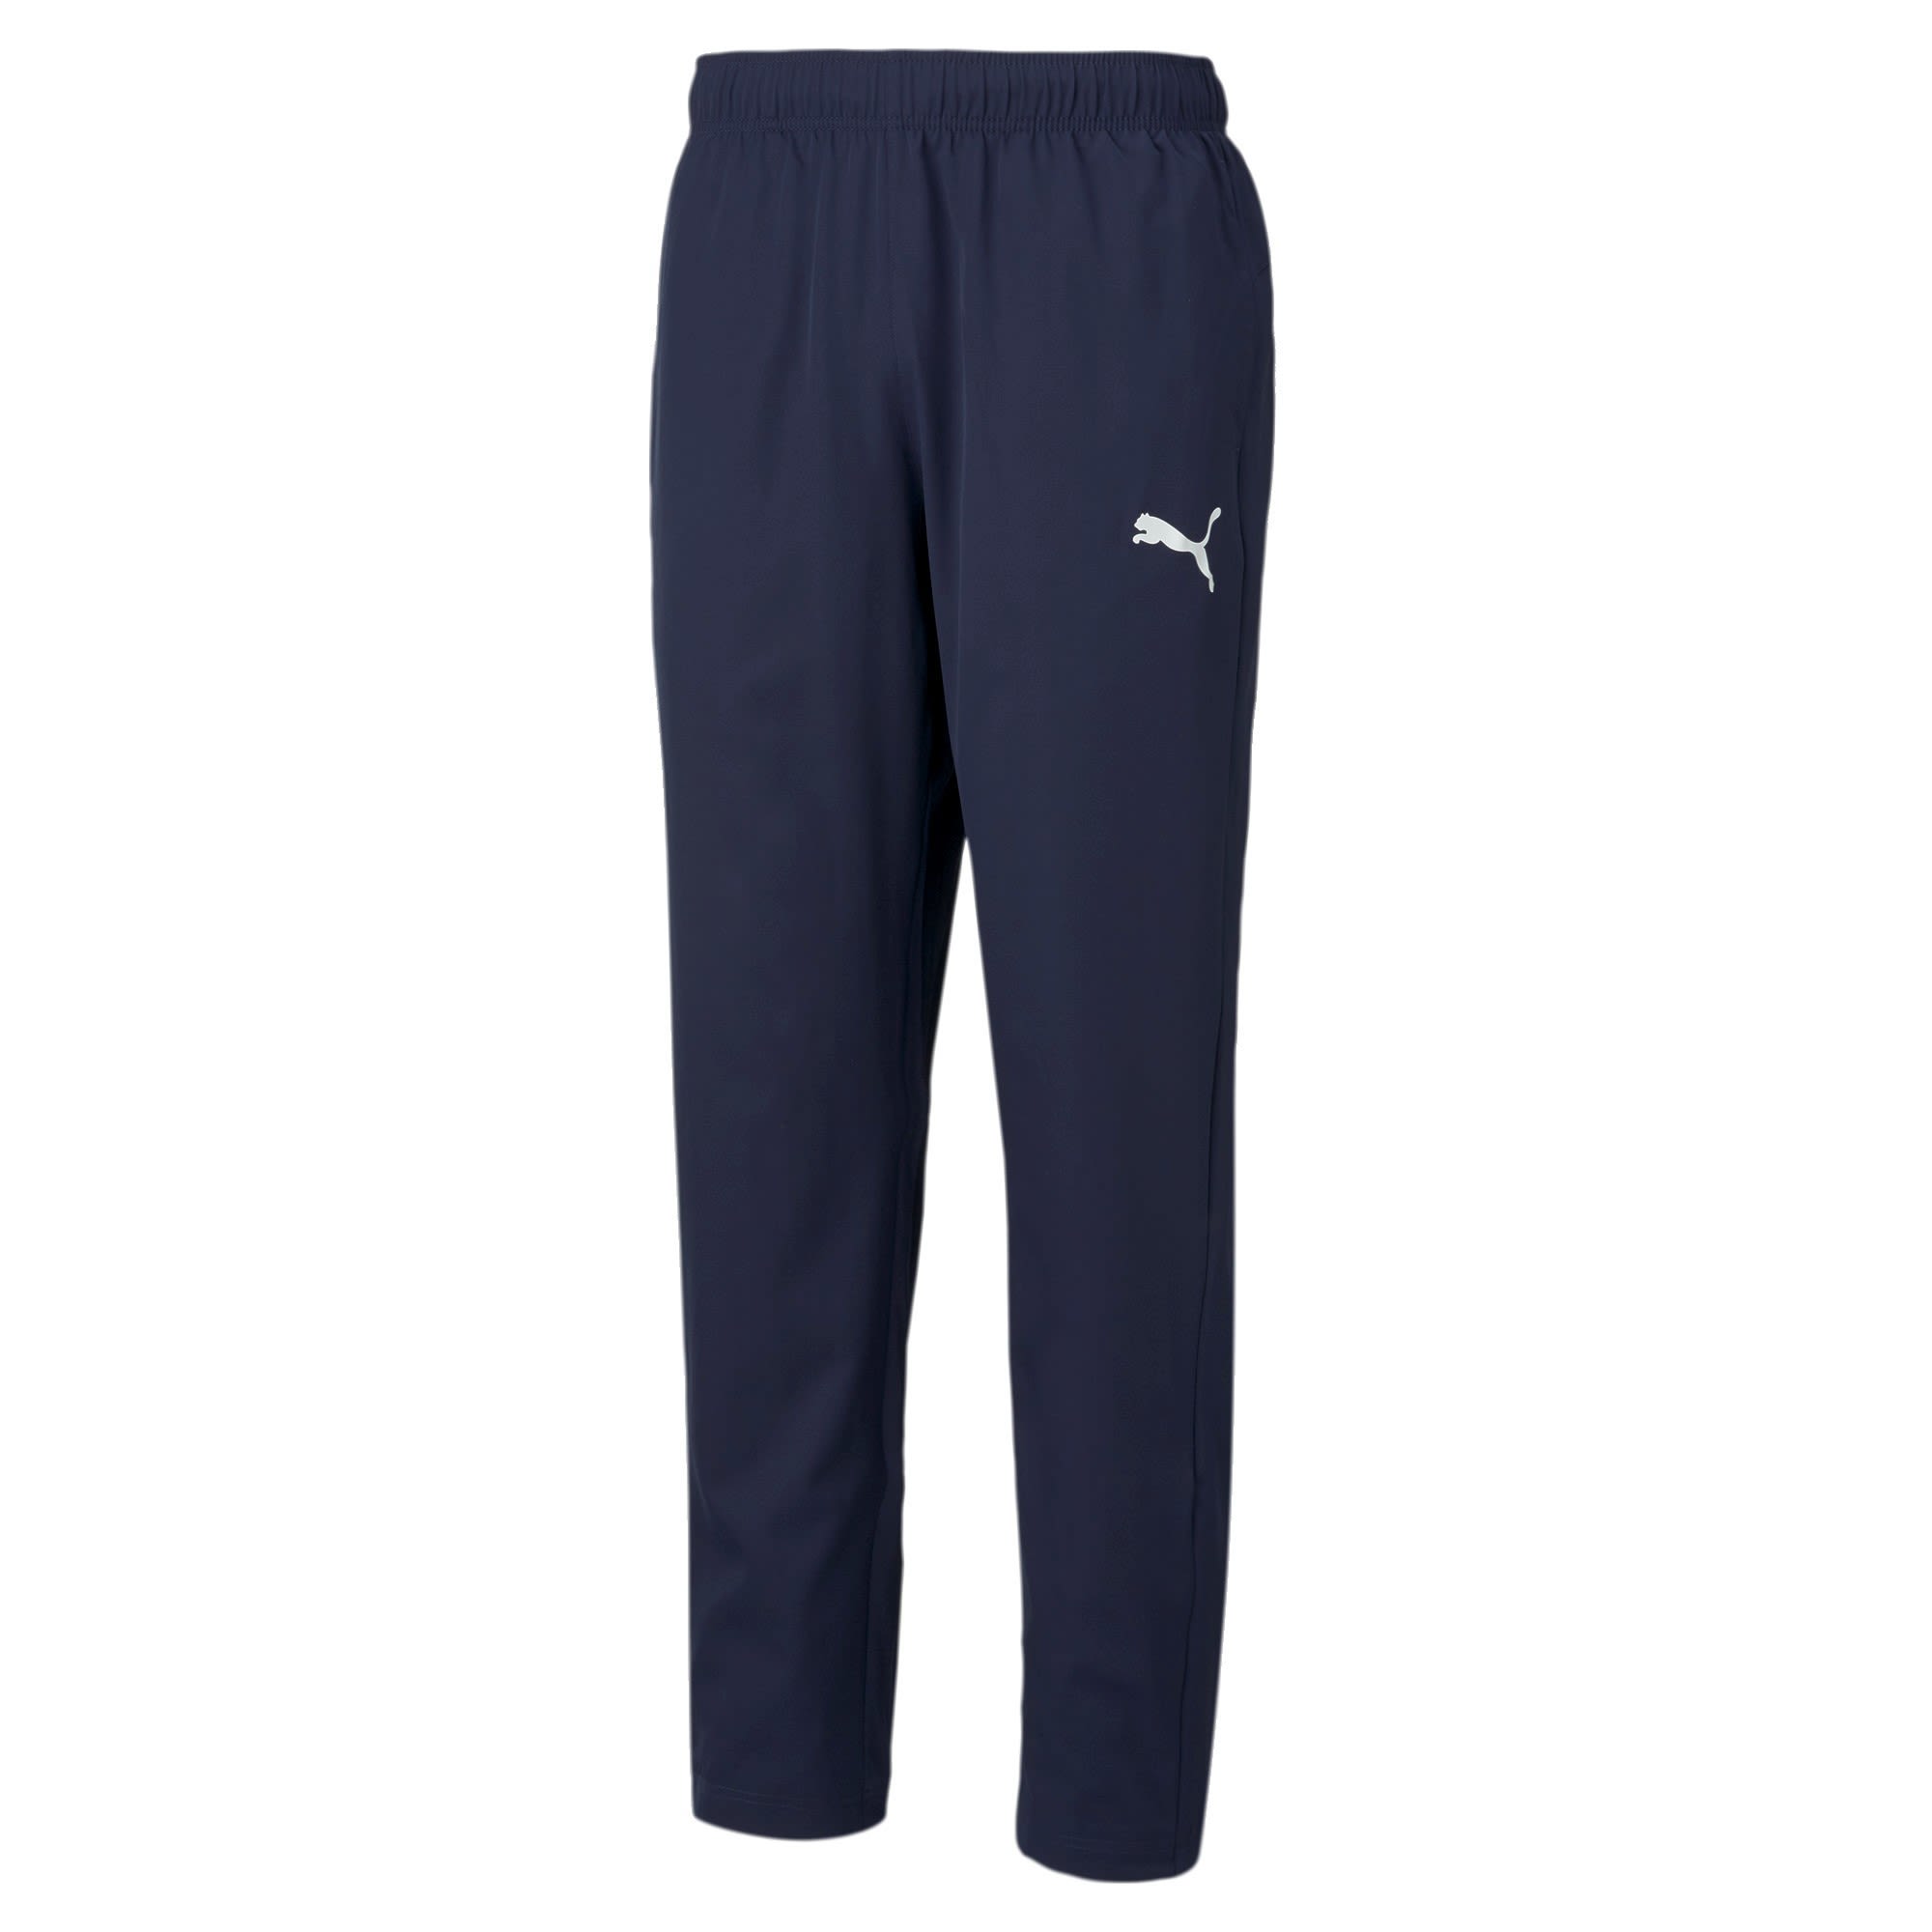 Puma Active Woven Pants SRL Blau- Male Softshellhosen- Grsse S - Short - Farbe Peacoat